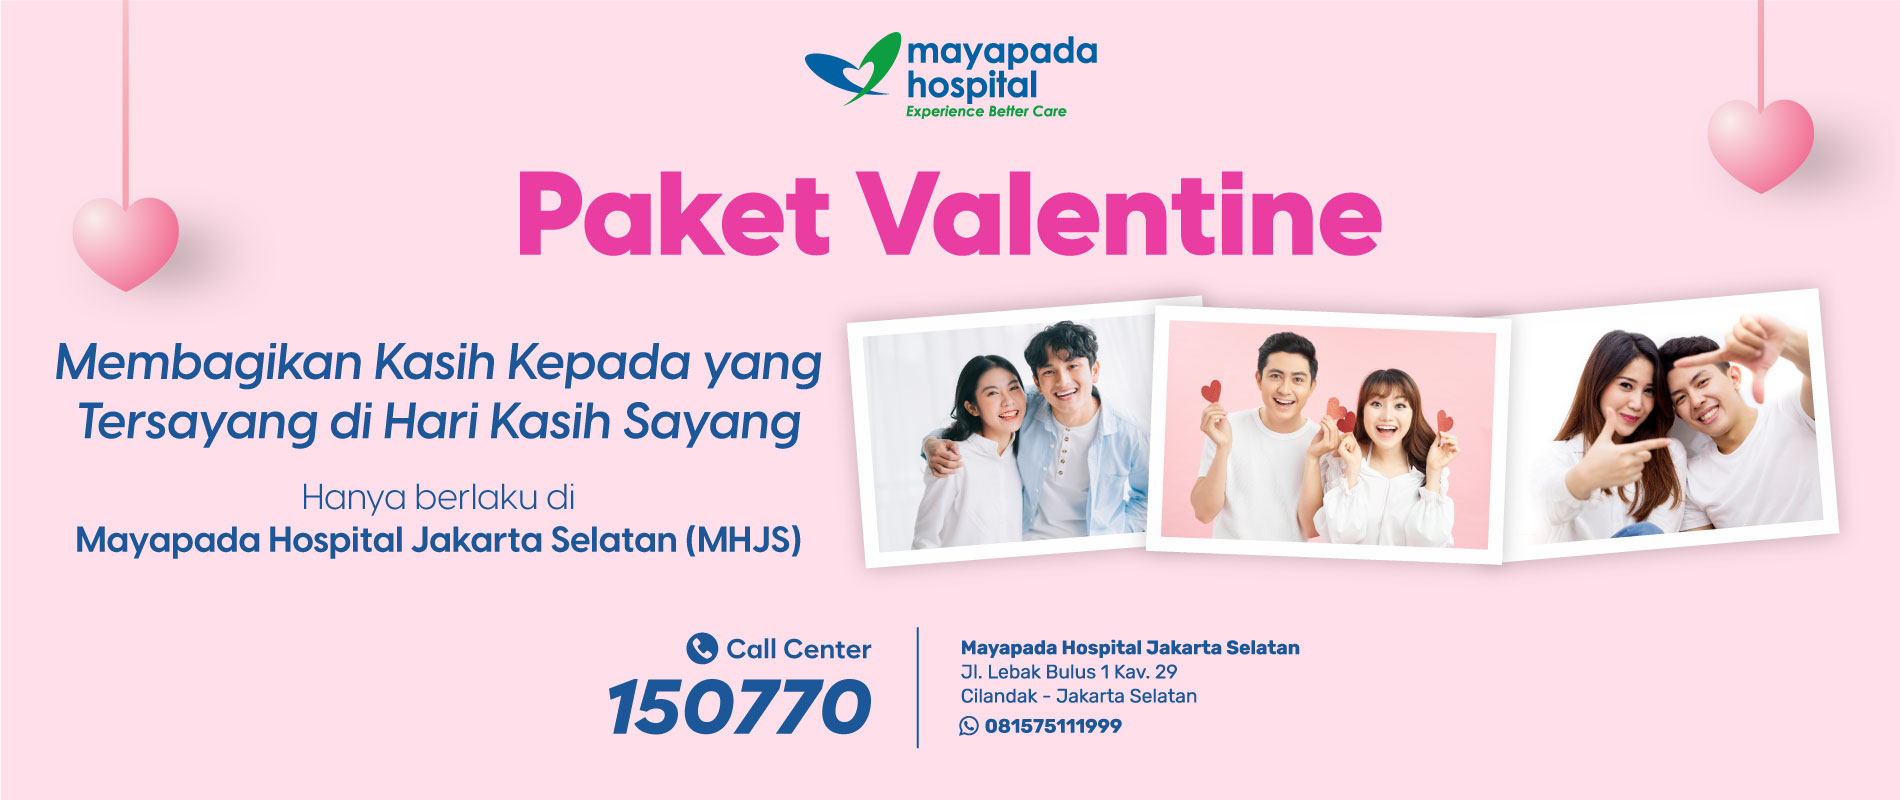 Paket Valentine Mayapada Hospital Jakarta Selatan (MHJS) IMG